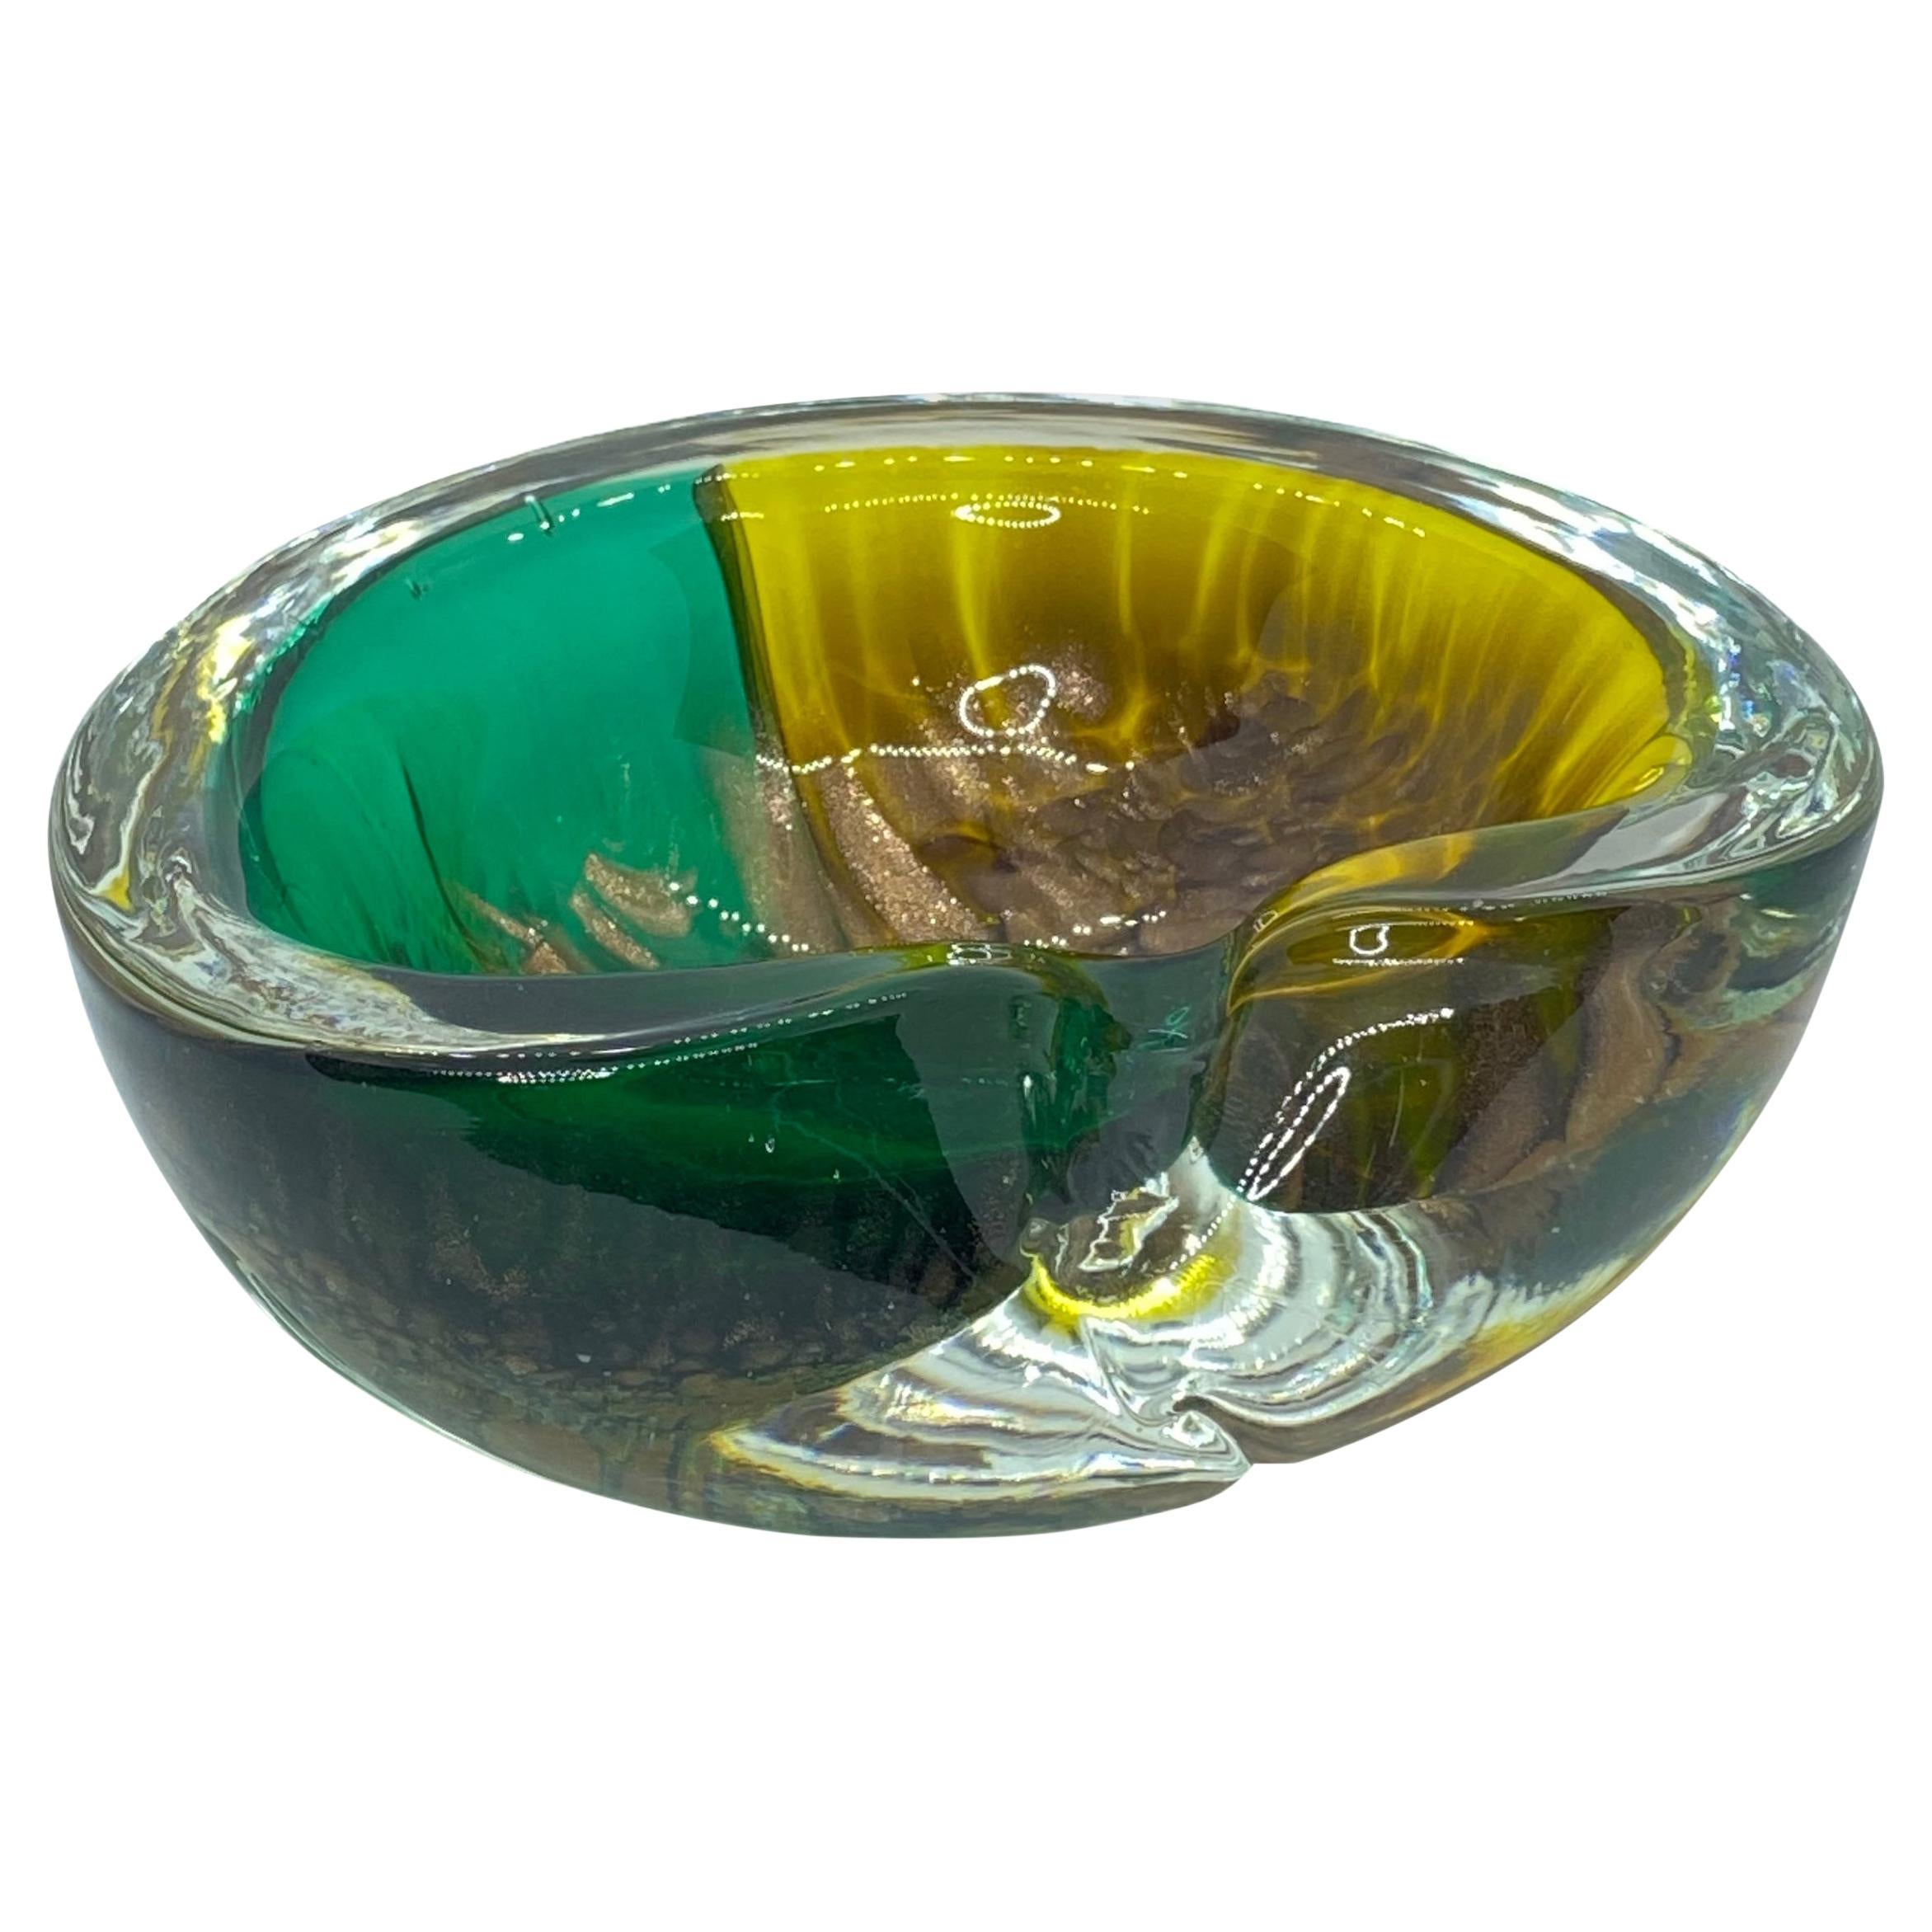 ANTIQUE VINTAGE MURANO ART GLASS VARIOUS COLORS ITALIAN ASHTRAY BOWL 